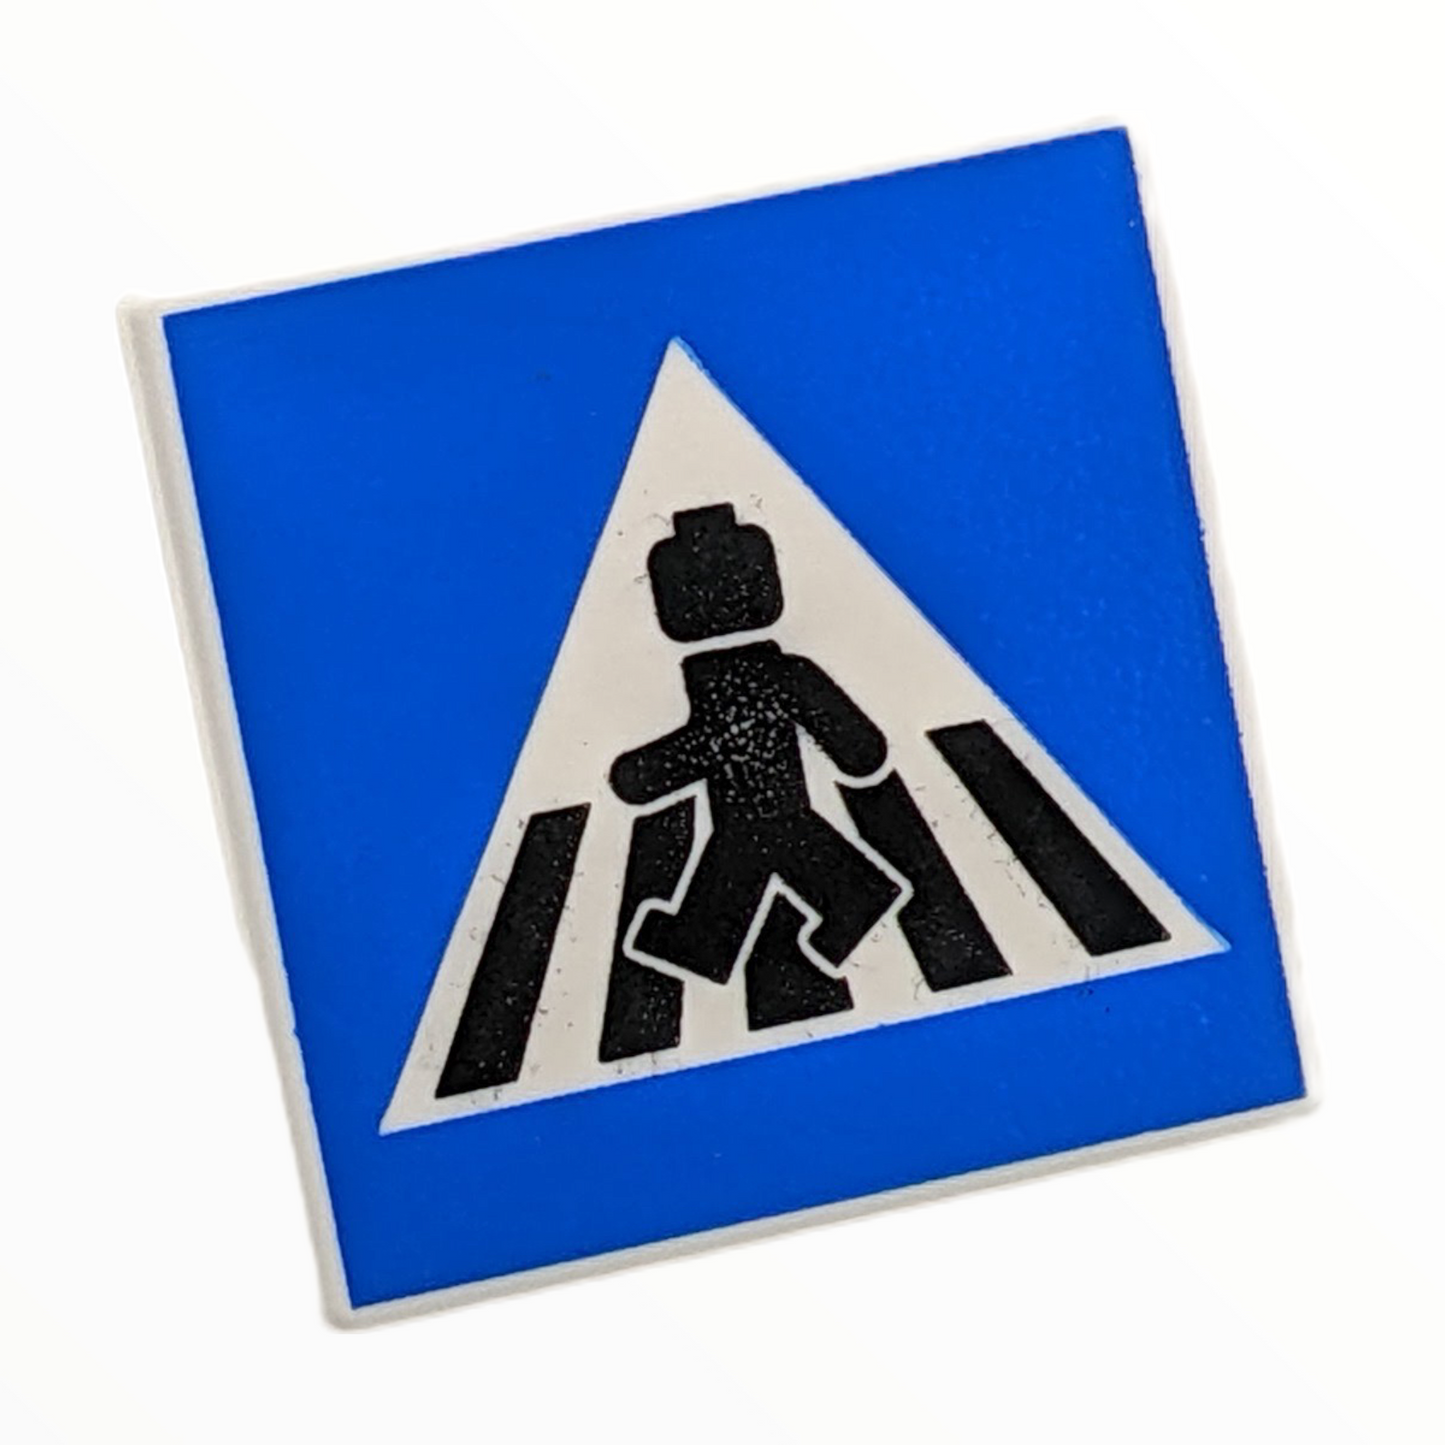 LEGO Road Sign  2x2 - Zebrastreifen